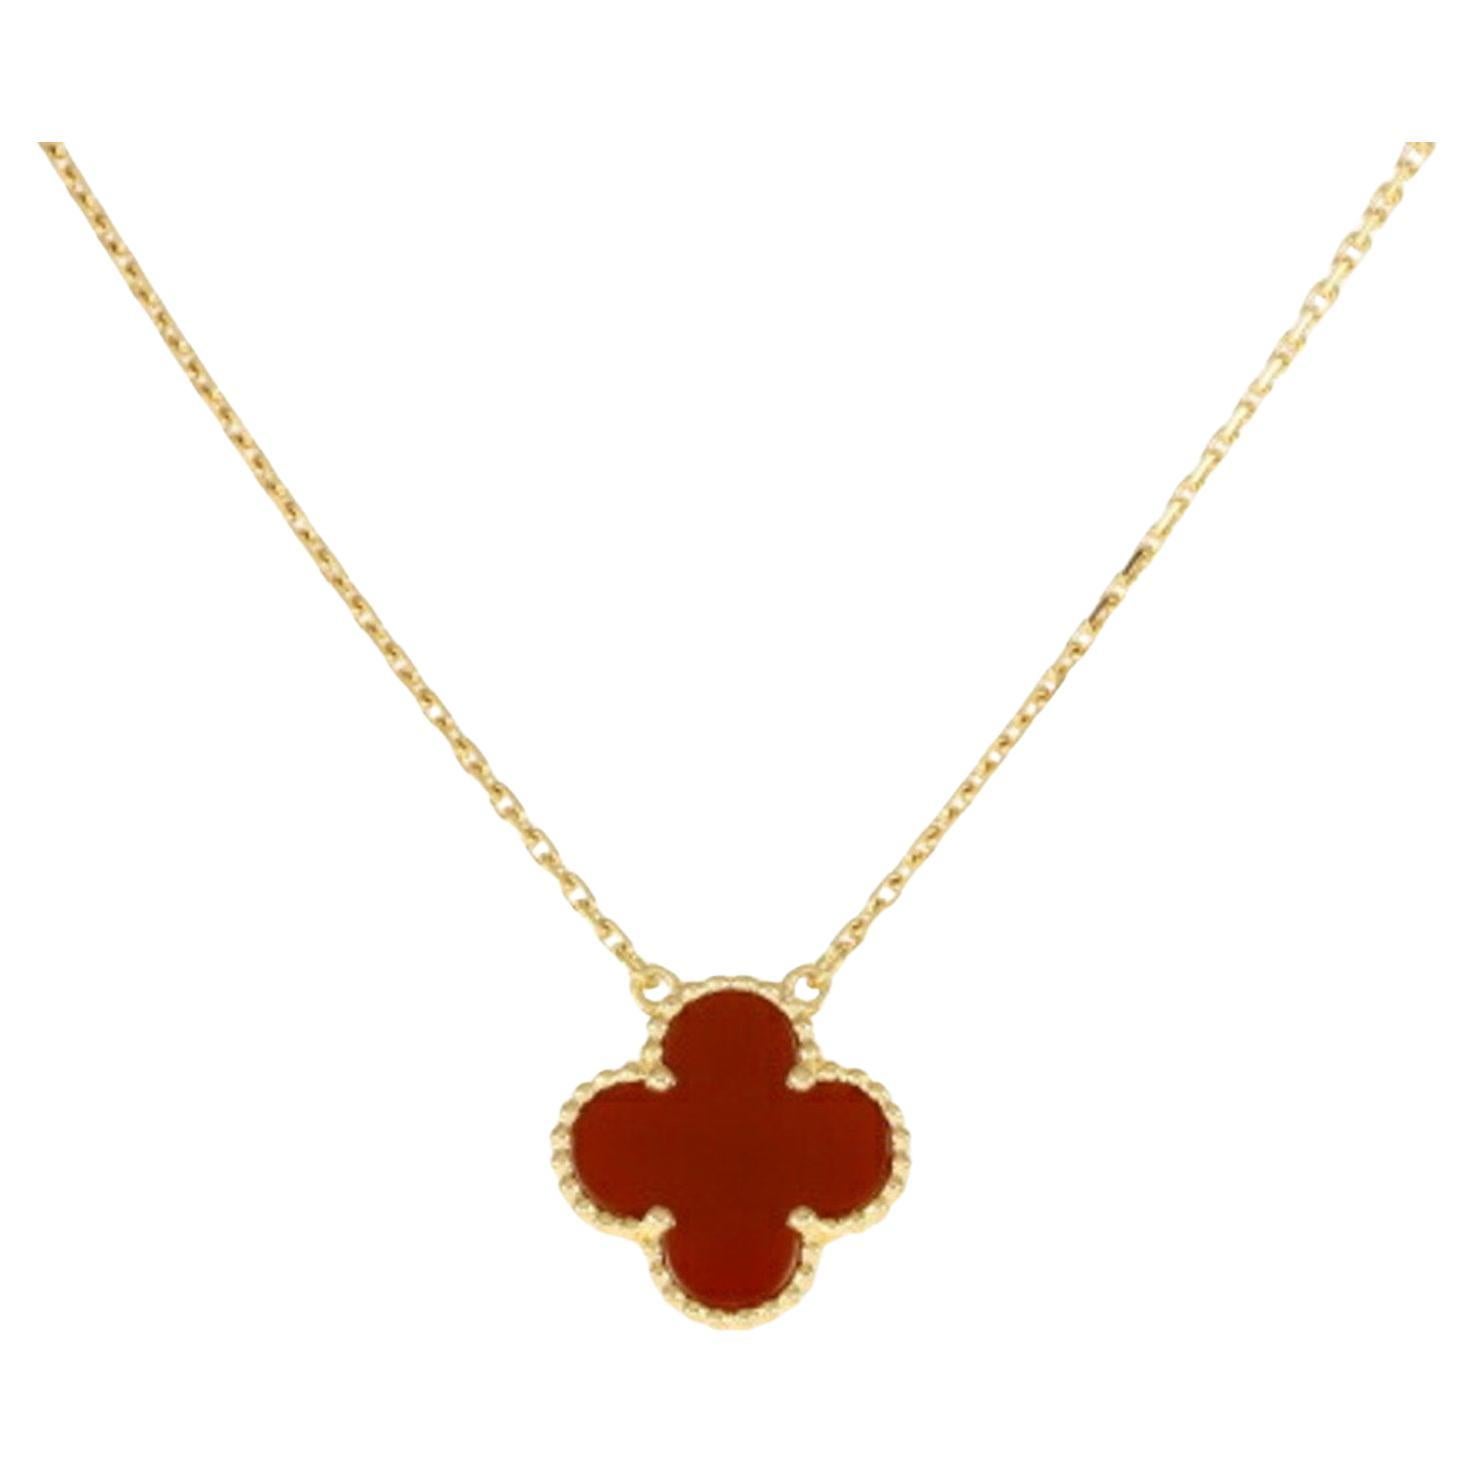 Van Cleef & Arpels Vintage Alhambra Pendant Necklace in 18K Yellow Gold